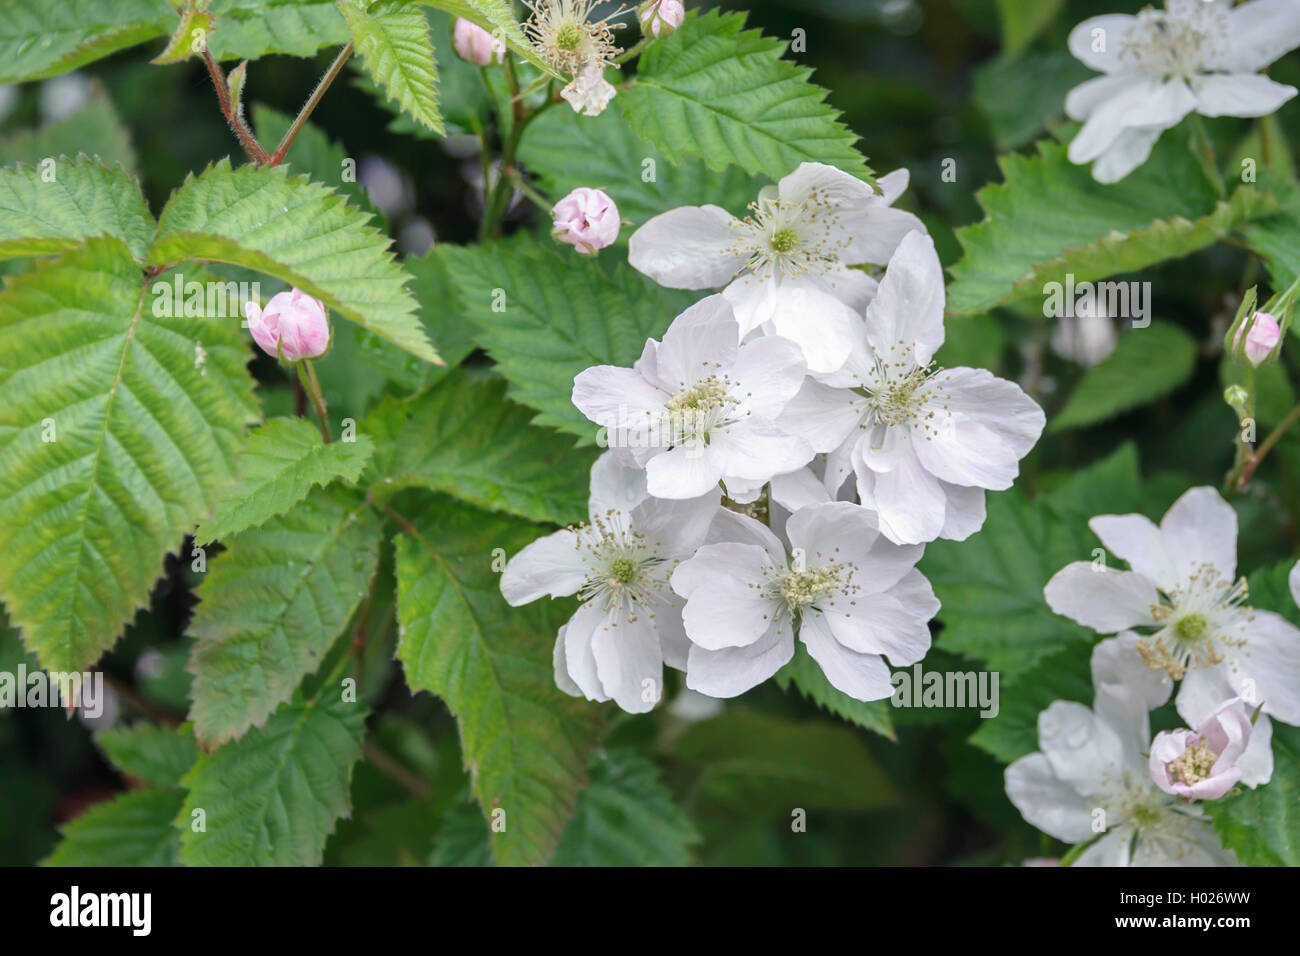 Arkansas blackberry (Rubus fruticosus 'Navaho', Rubus fruticosus Navaho), blooming, cultivar Navaho, Germany, Saxony Stock Photo